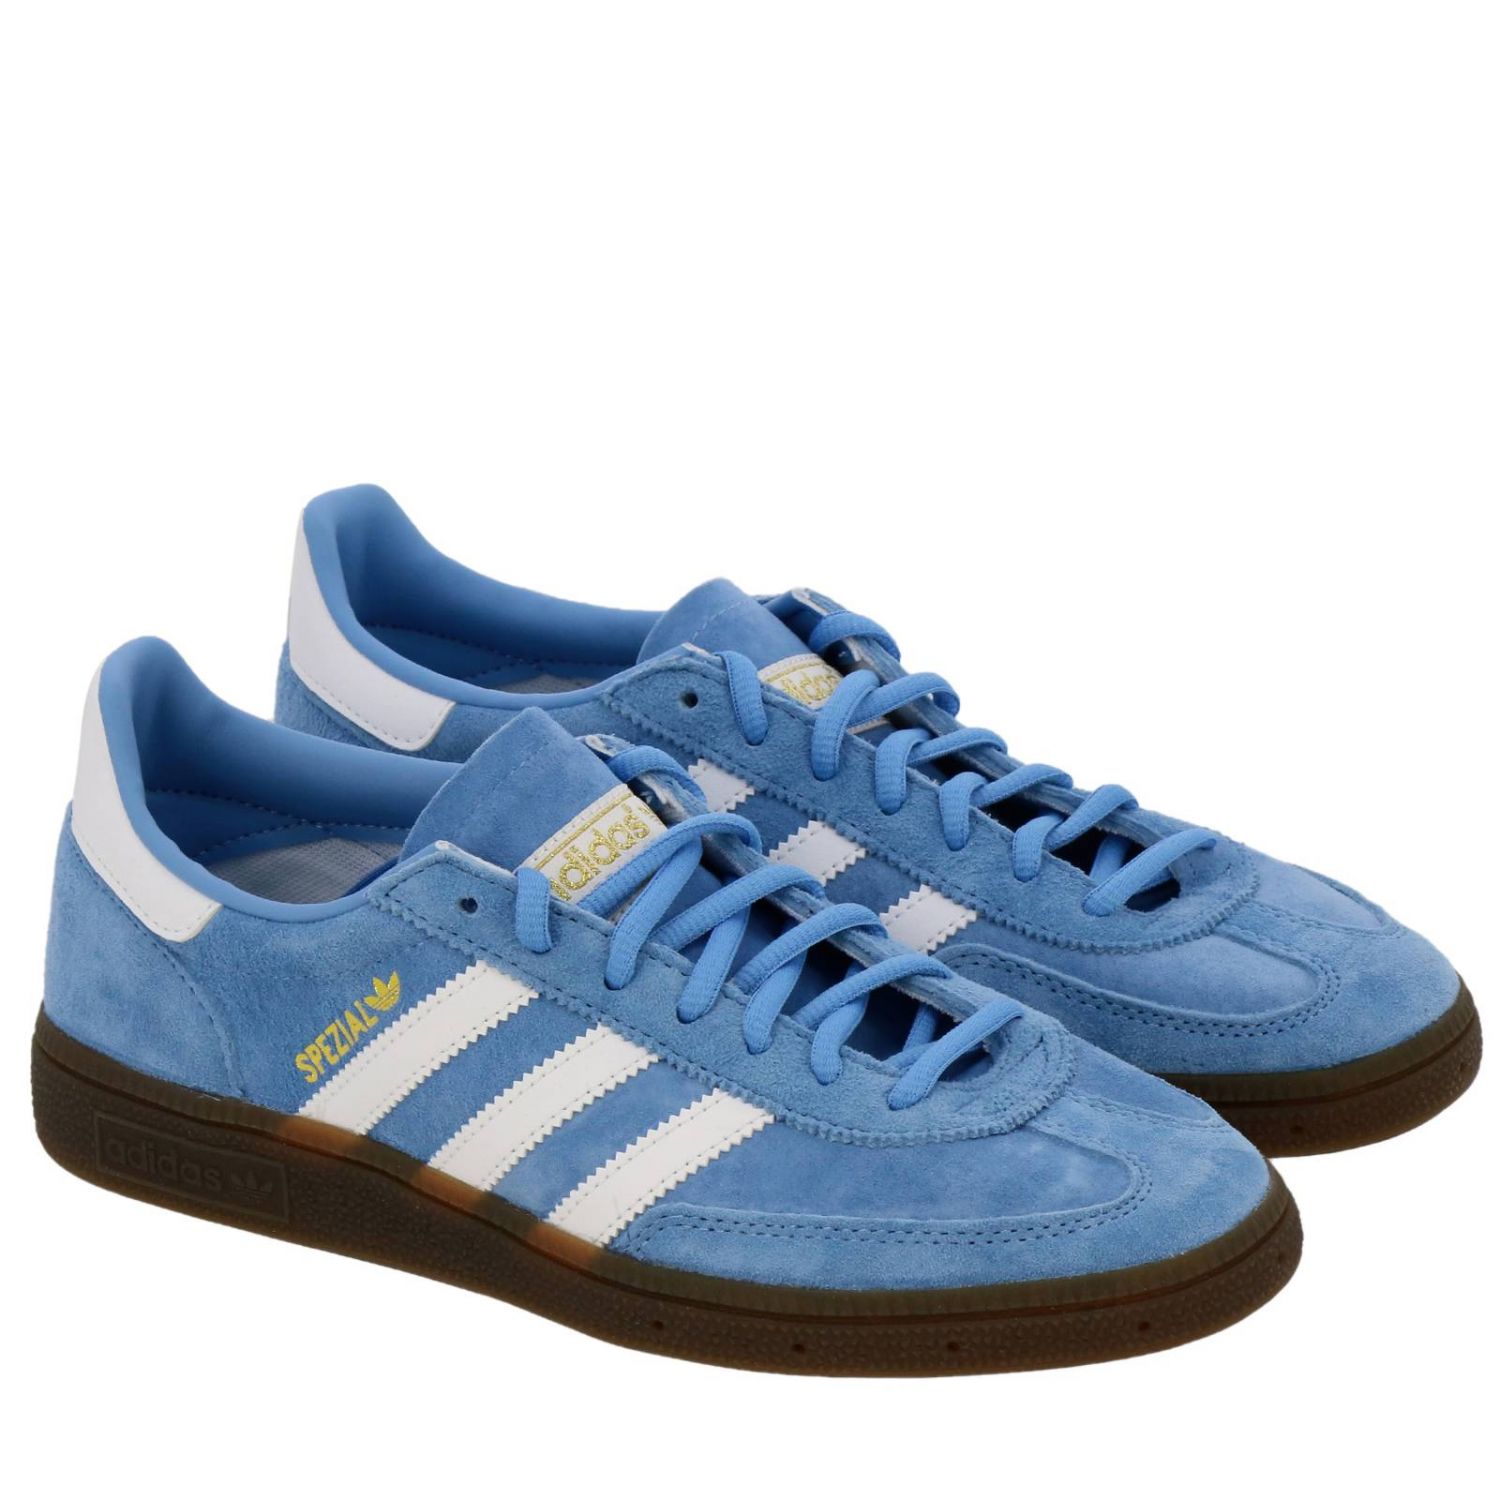 Adidas Originals Outlet: Sneakers men - Sky Blue | Sneakers Adidas ...